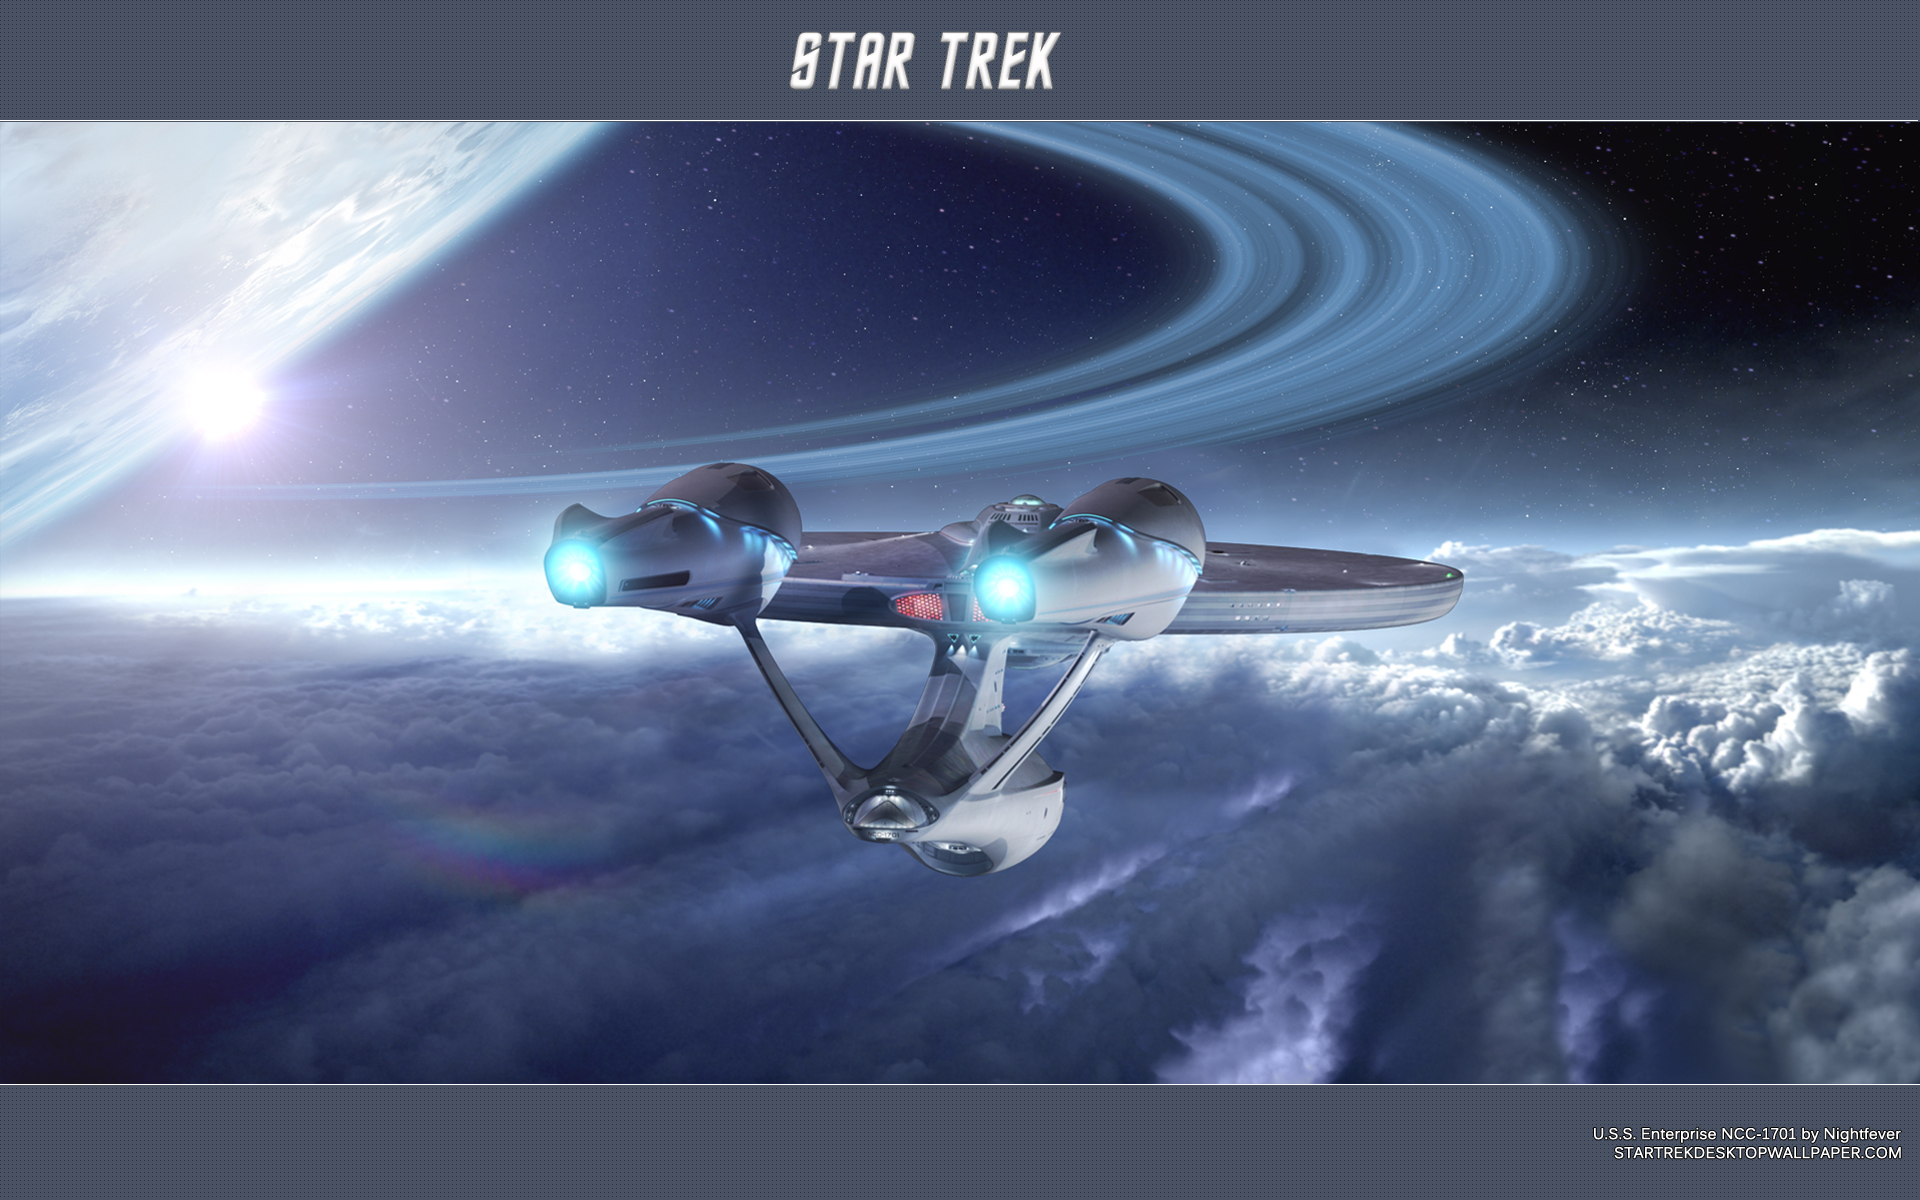 - Star Trek USS Enterprise NCC-1701 - free Star Trek computer desktop wallpaper, pictures, images.